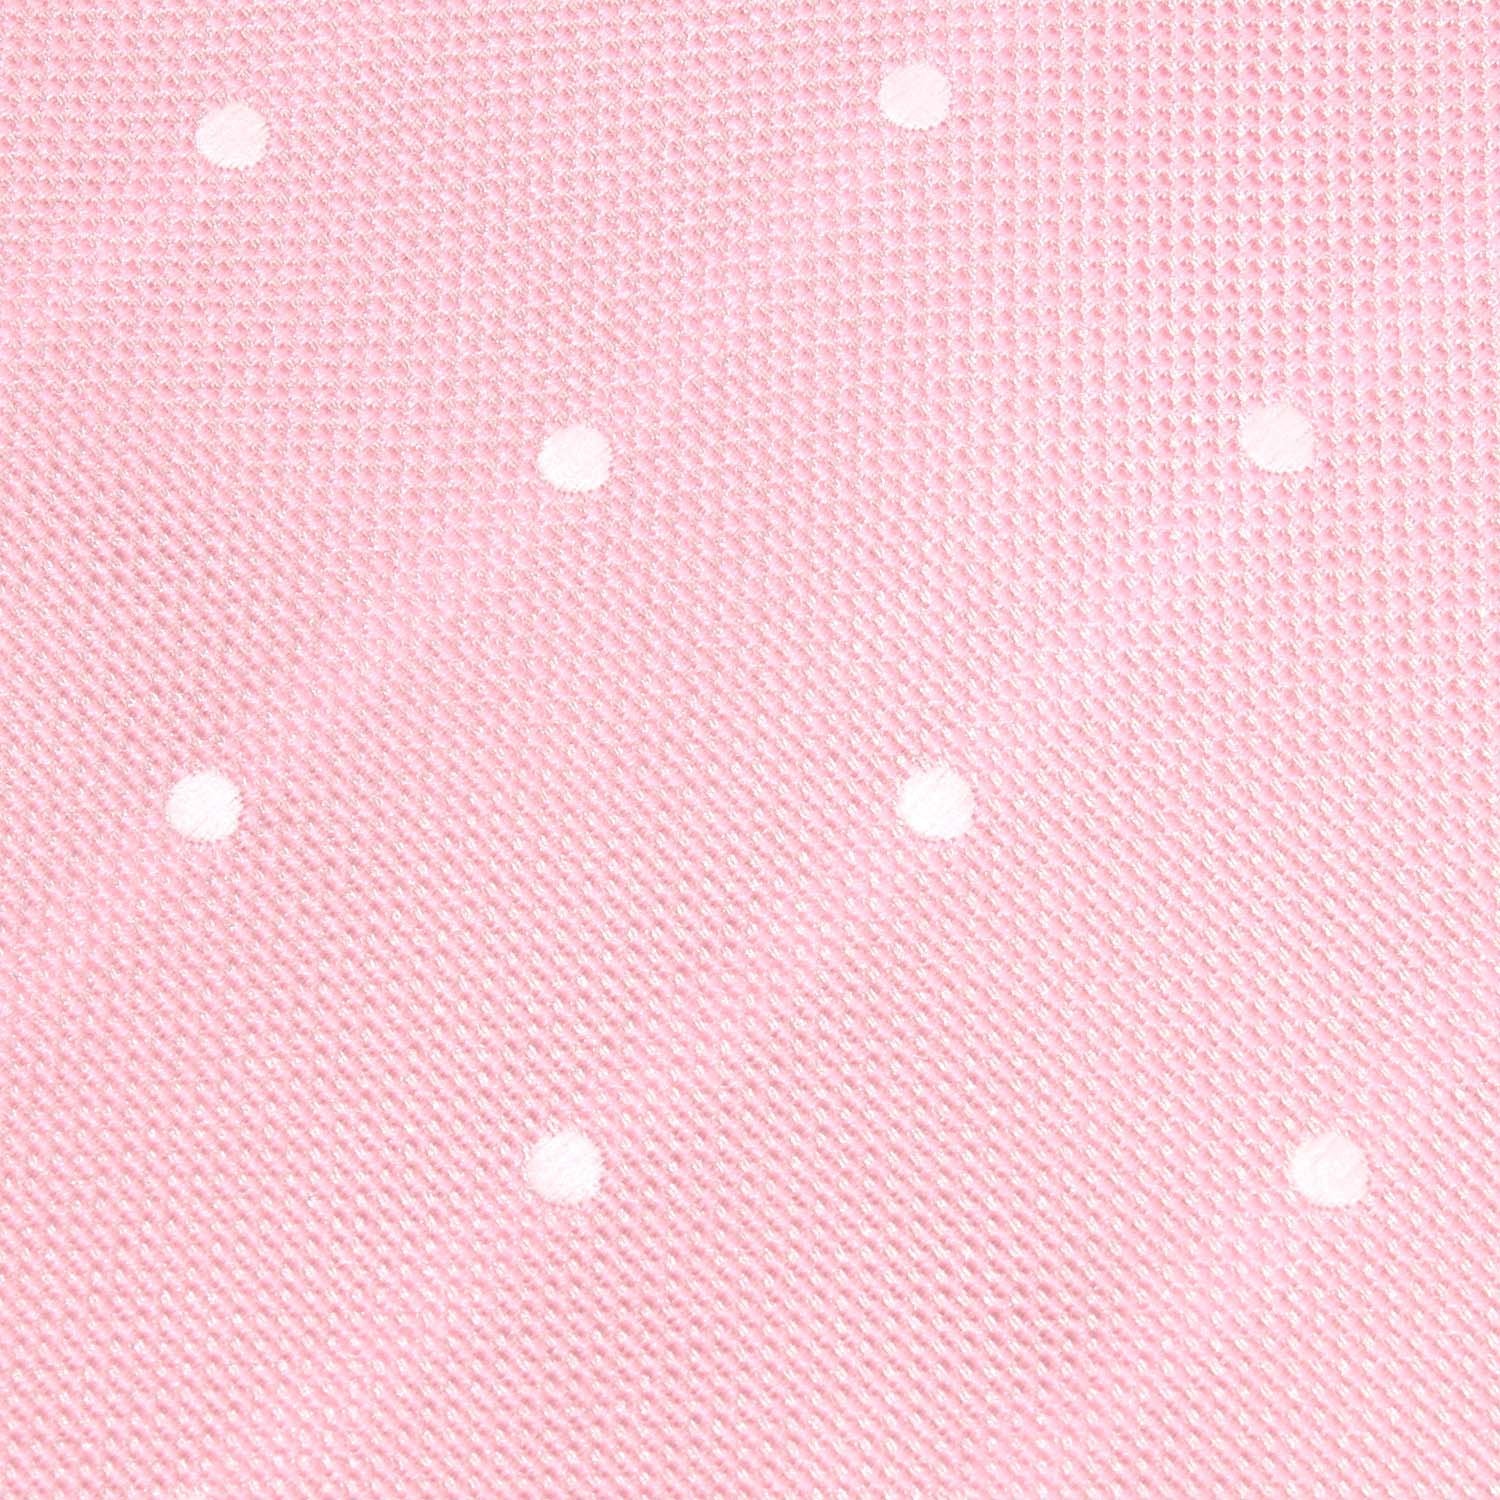 Baby Pink with White Polka Dots Fabric Self Tie Diamond Tip Bow TieX238